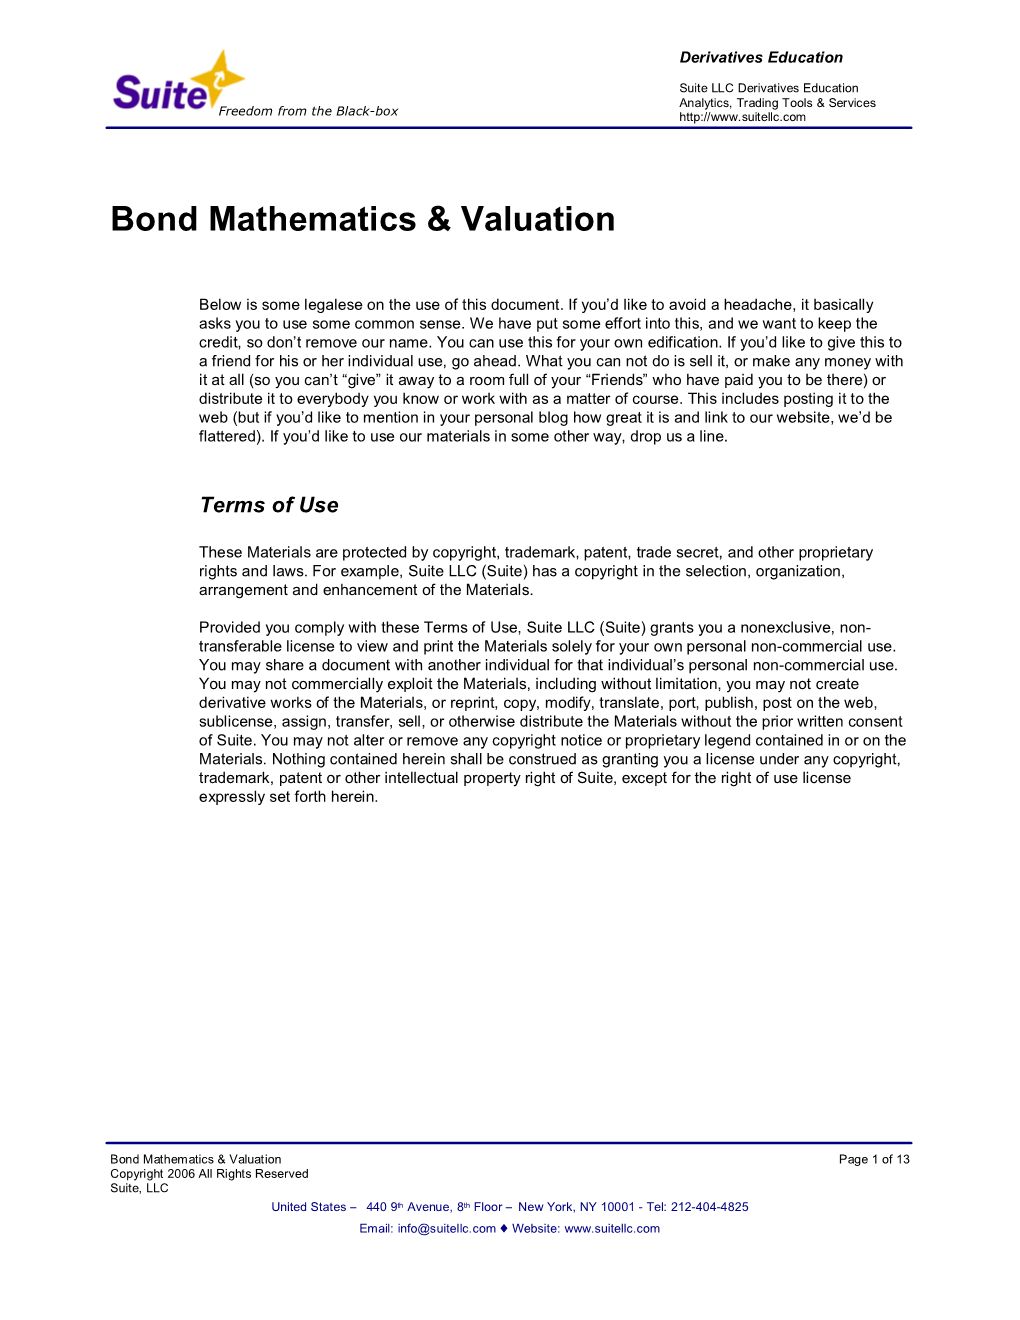 Bond Mathematics & Valuation